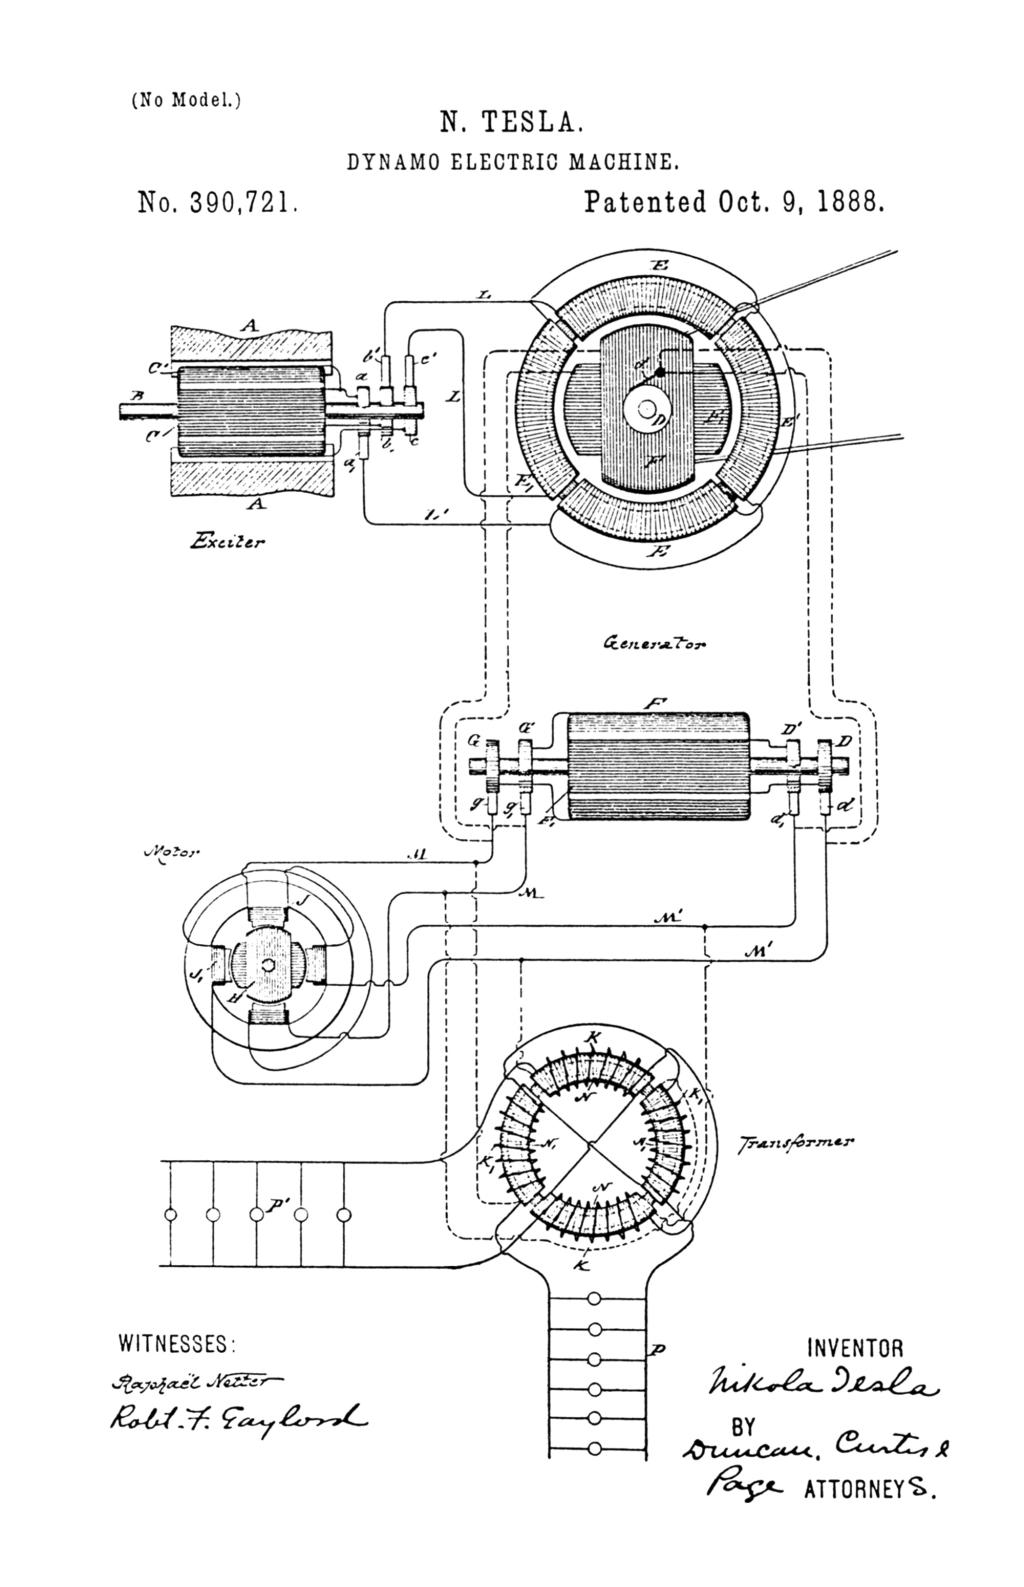 Nikola Tesla U.S. Patent 390,721 - Dynamo-Electric Machine - Image 1